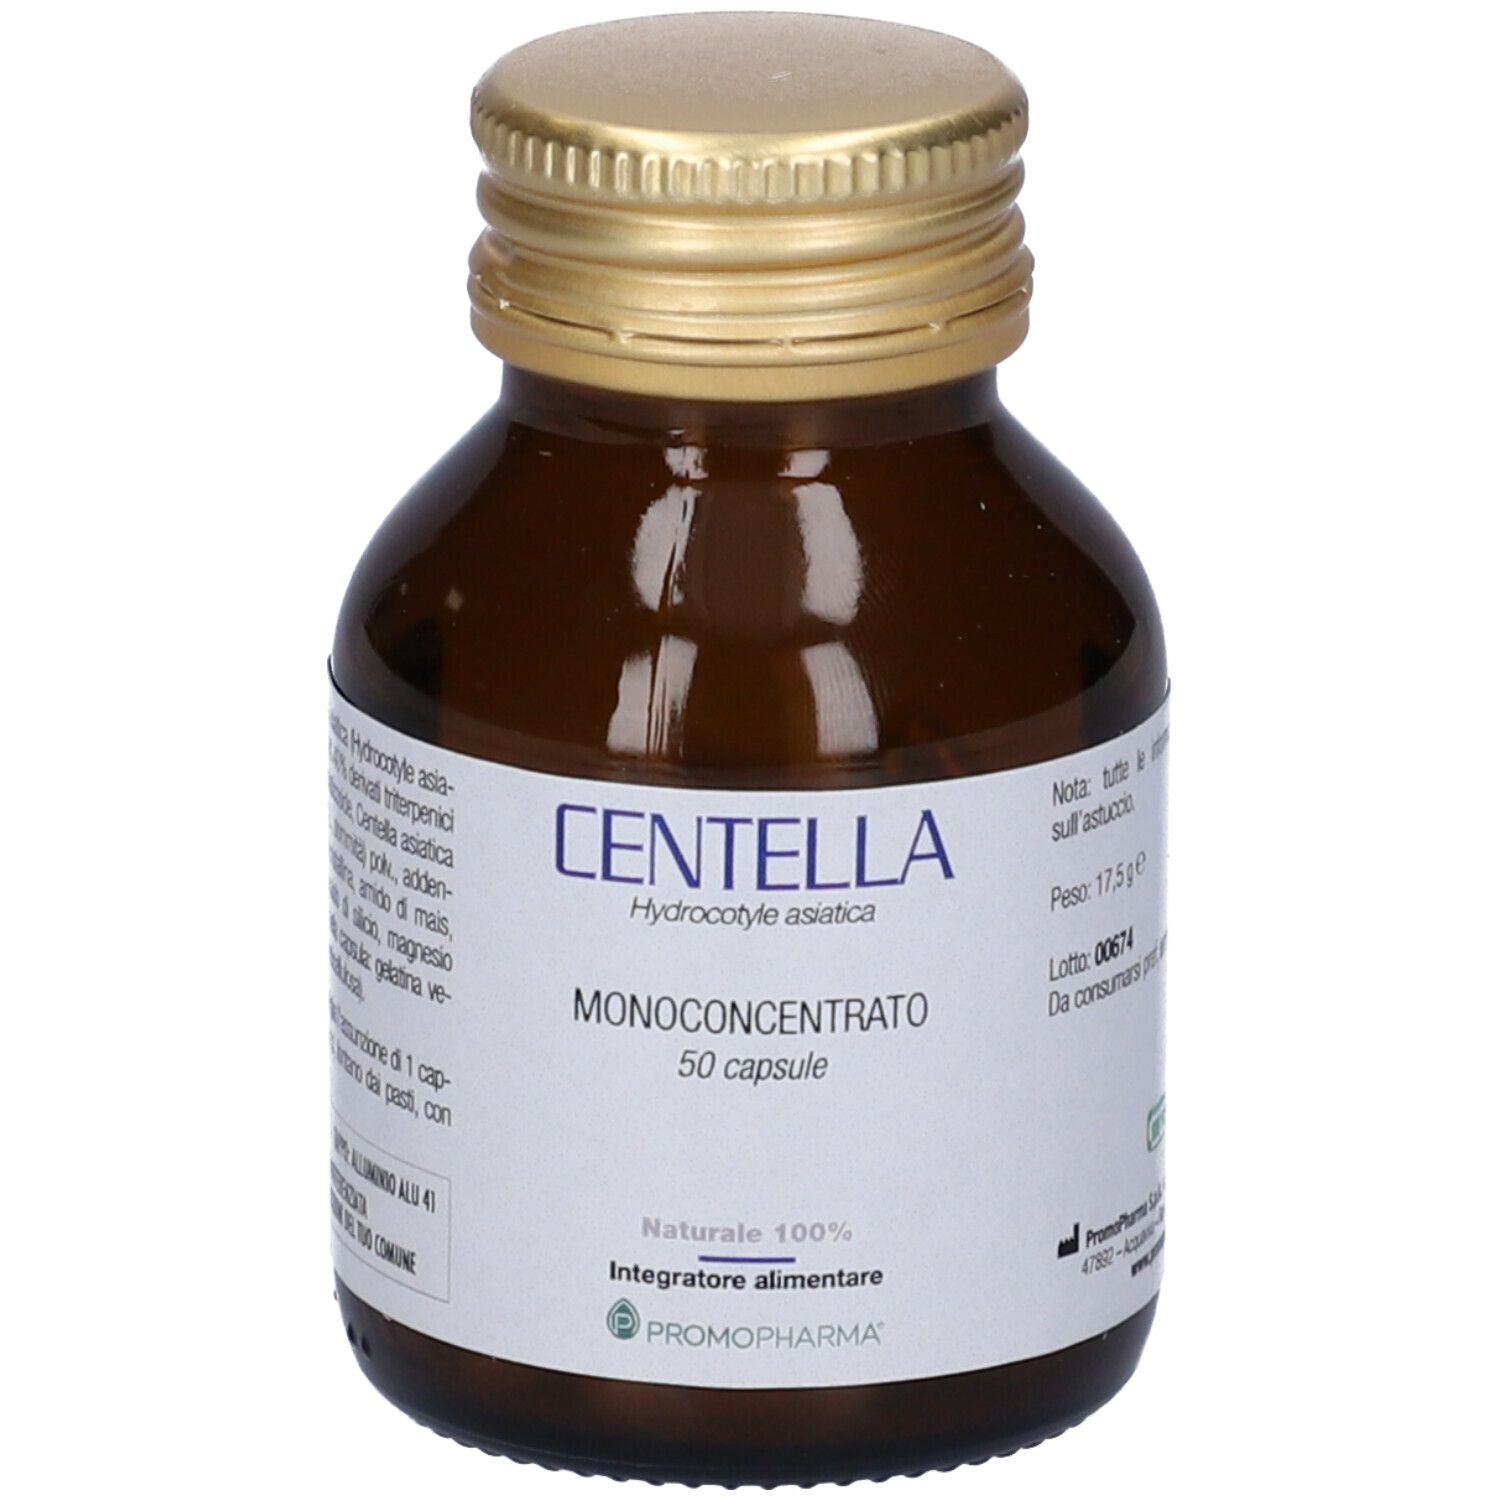 Image of PromoPharma® Centella asiatica